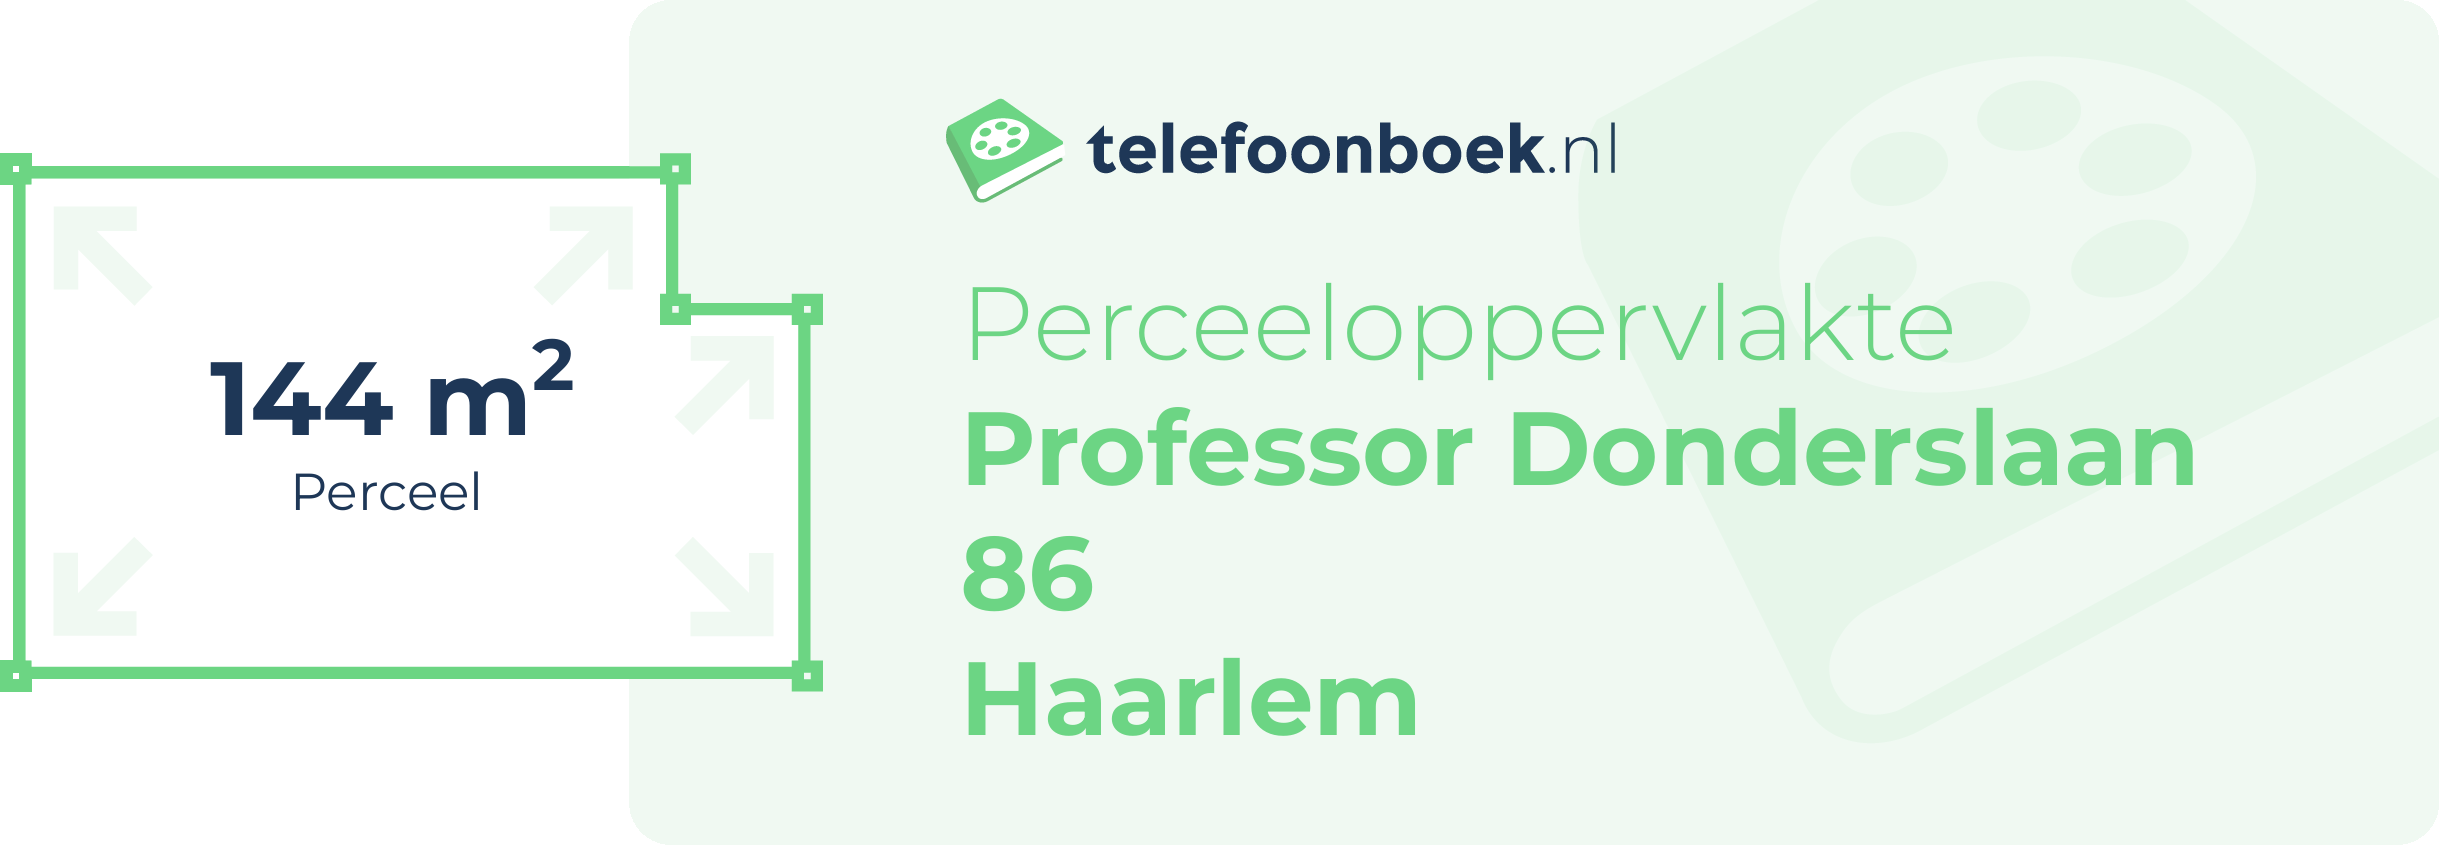 Perceeloppervlakte Professor Donderslaan 86 Haarlem